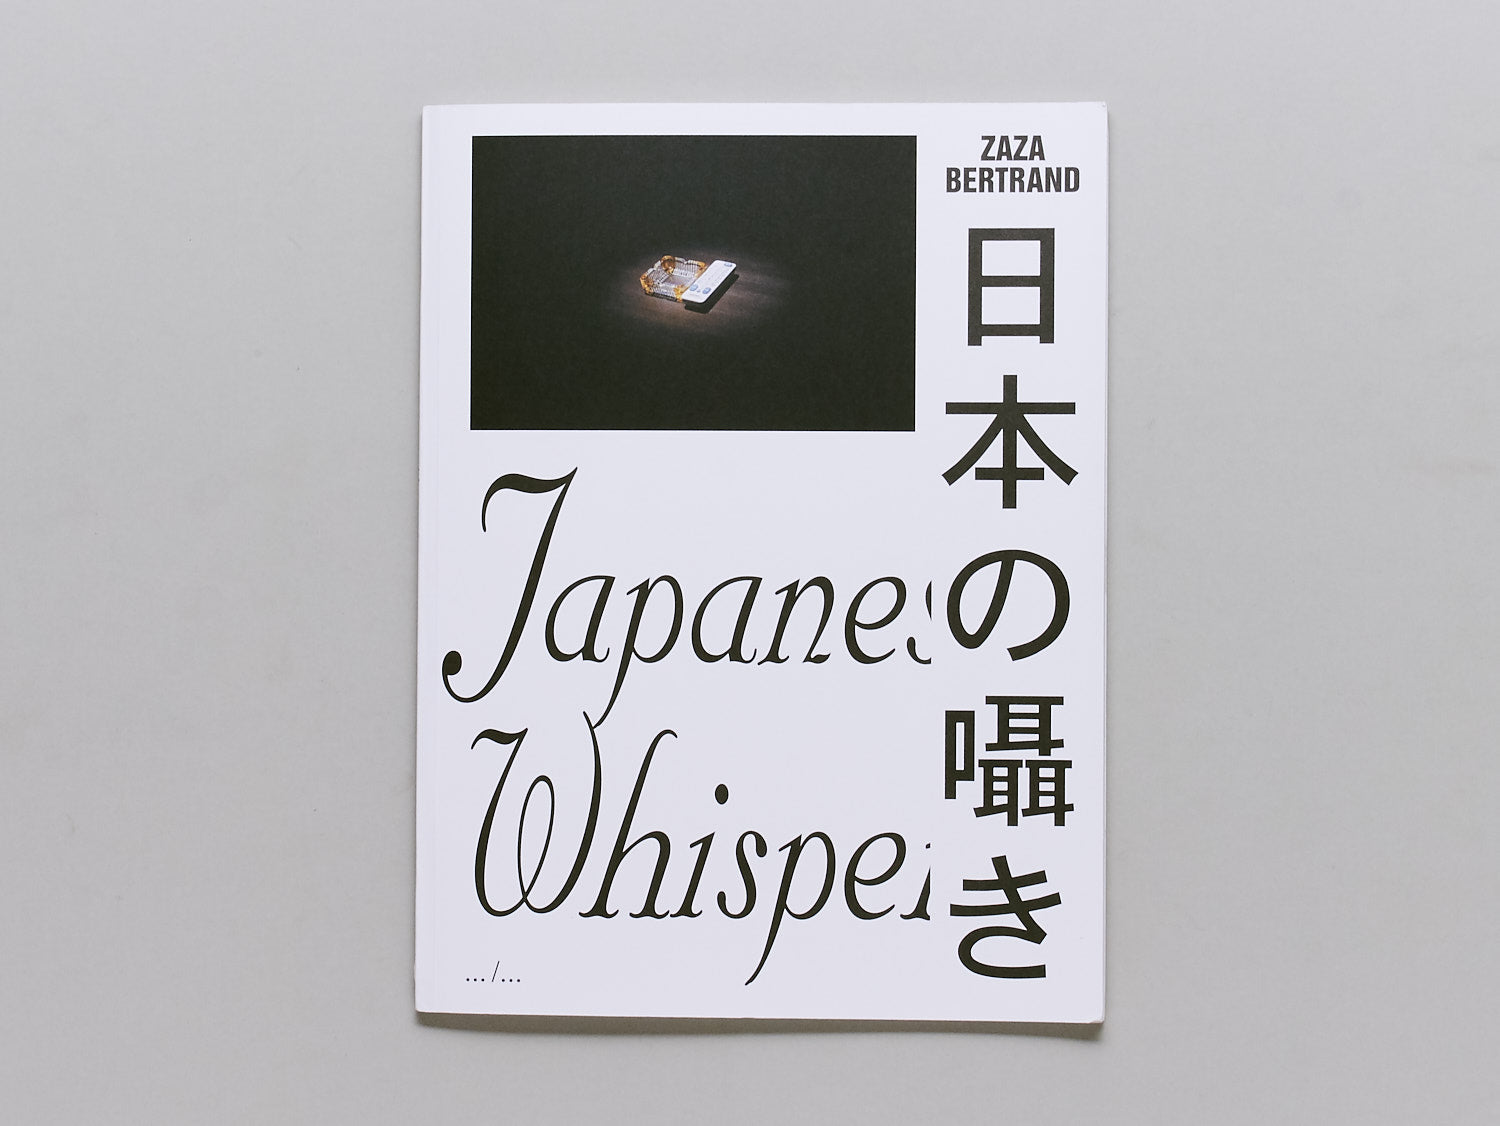 Japanese Whispers by Zaza Bertrand